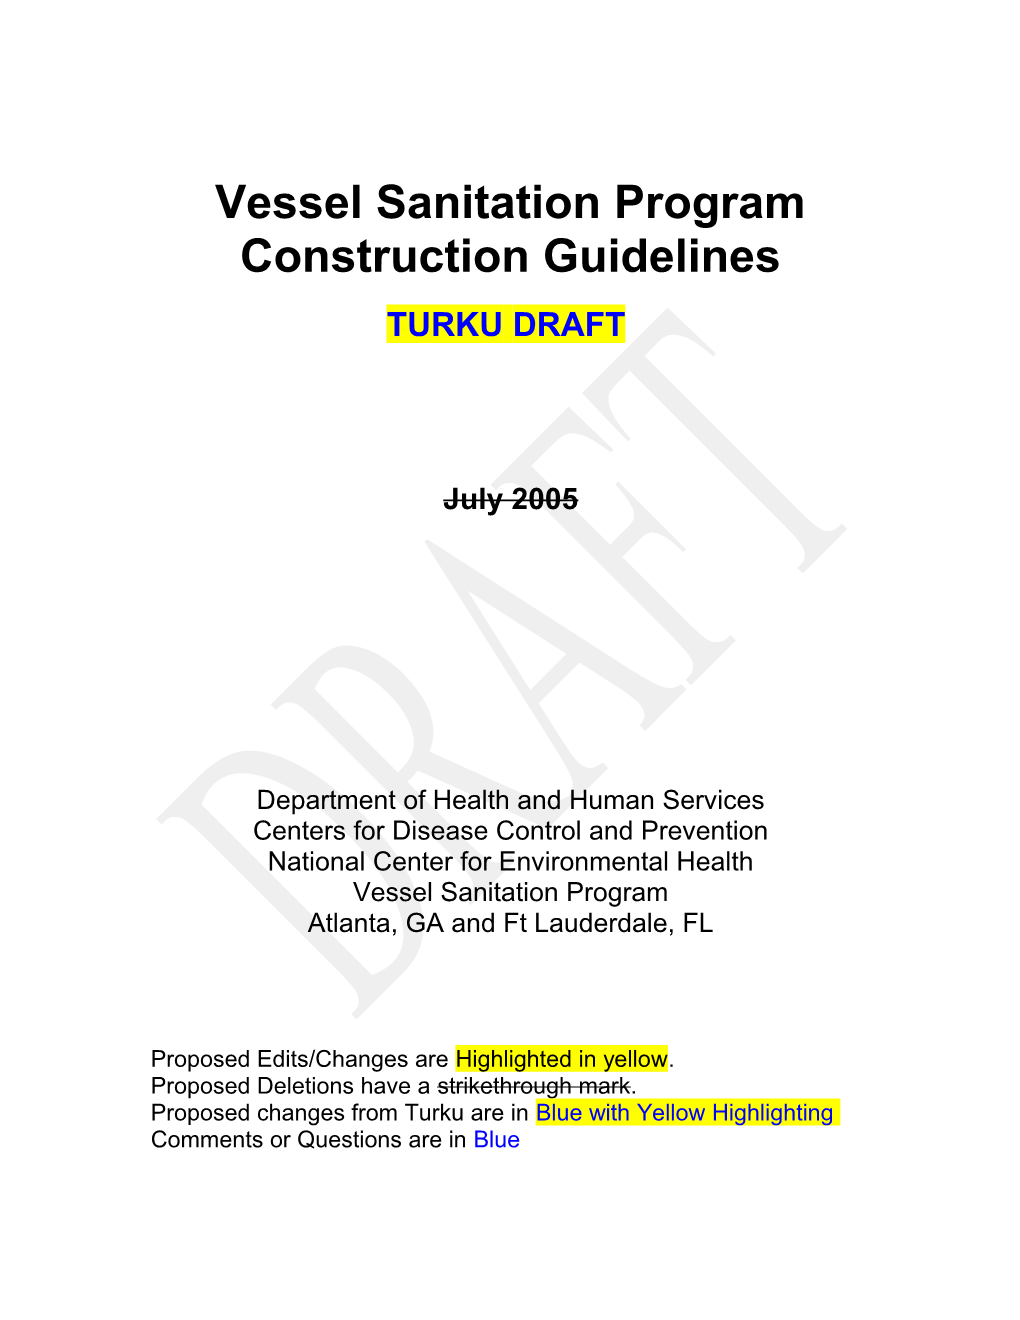 Vessel Sanitation Program Construction Guidelines